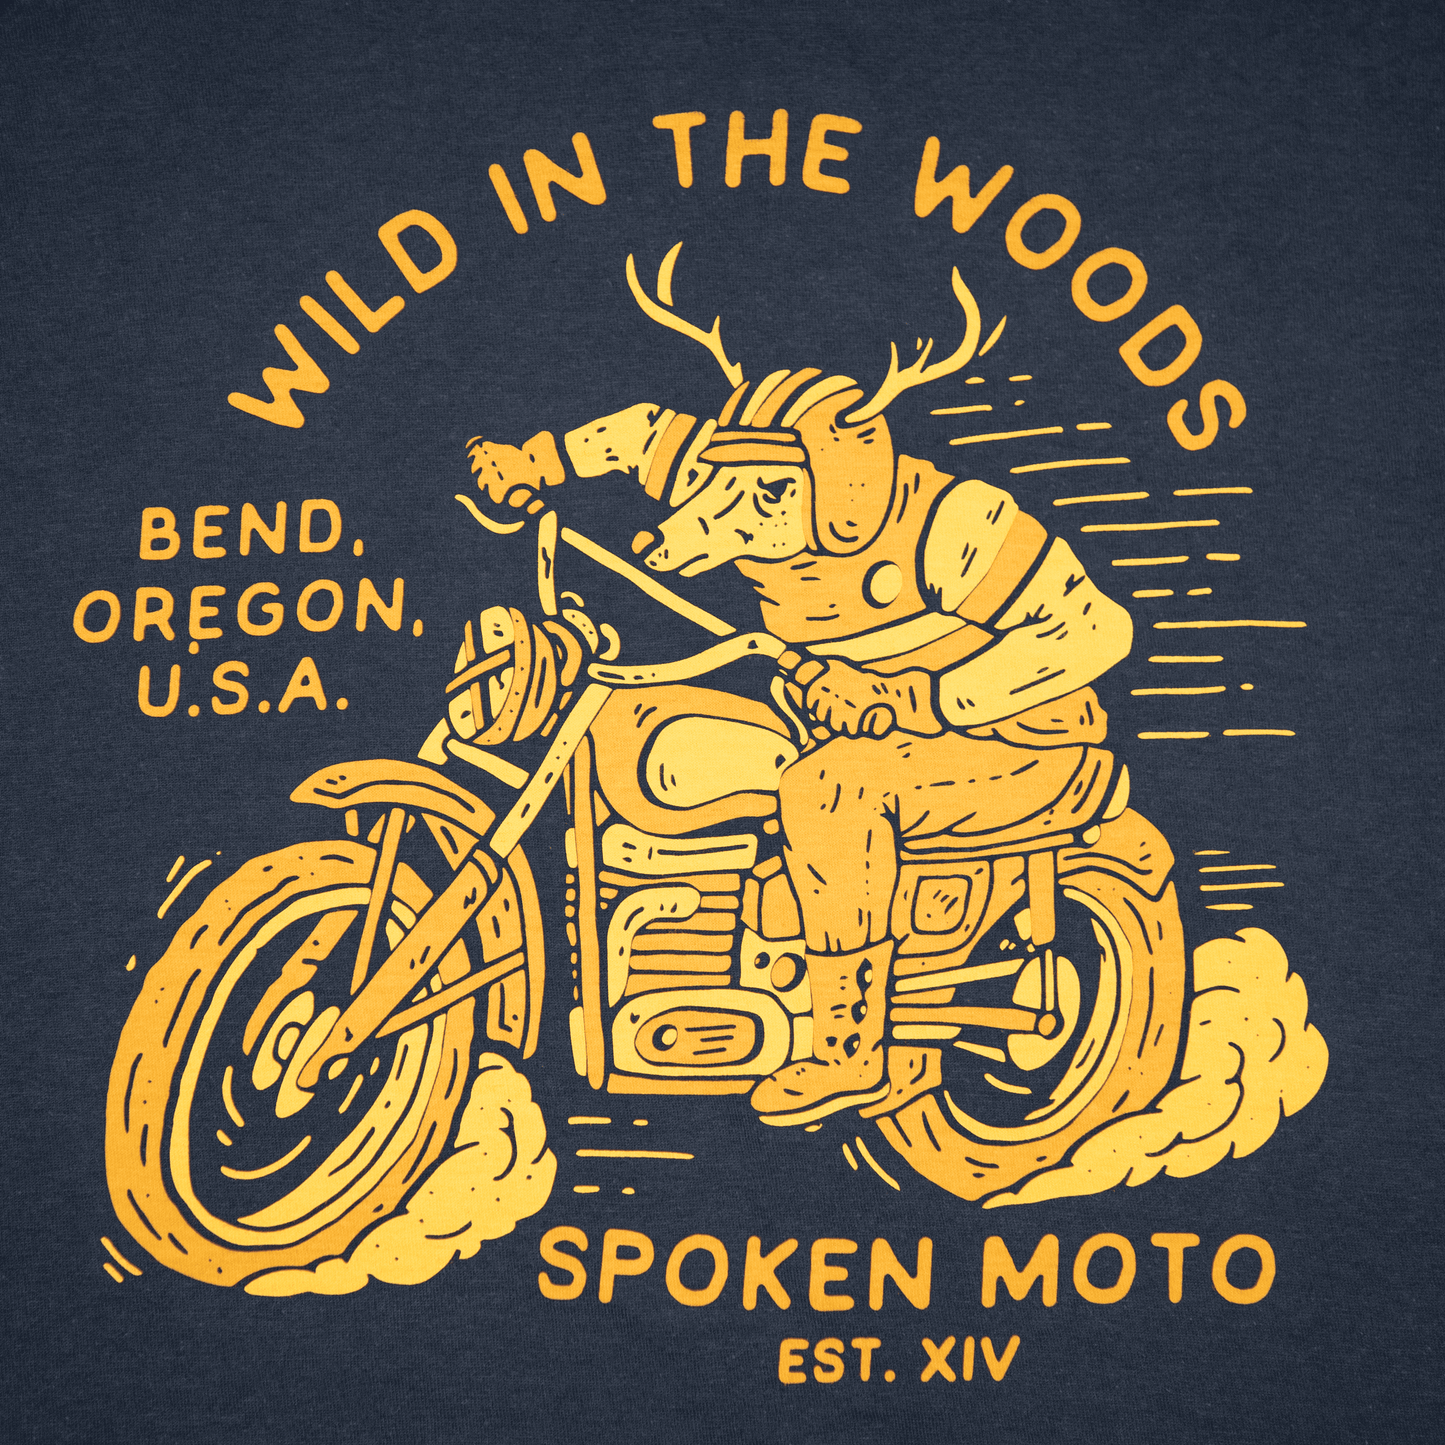 Close-up shot of the yellow/gold Spoken Moto deer riding a motorcycle logo.